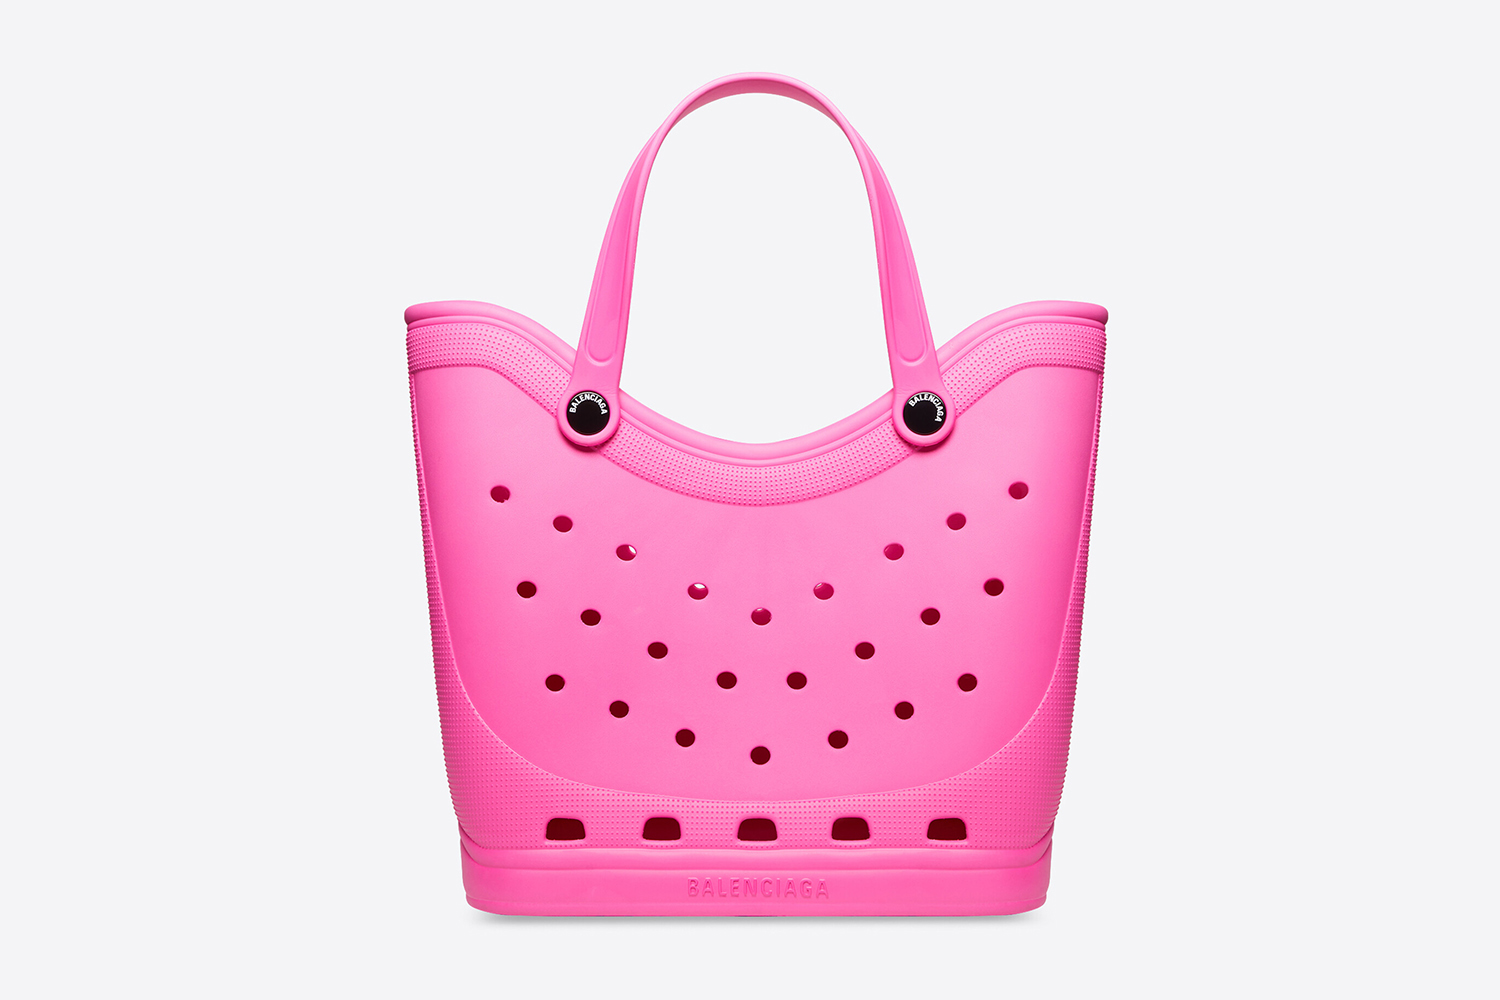 Balenciaga x Crocs Tote Bag, Phone Holder Release, Price